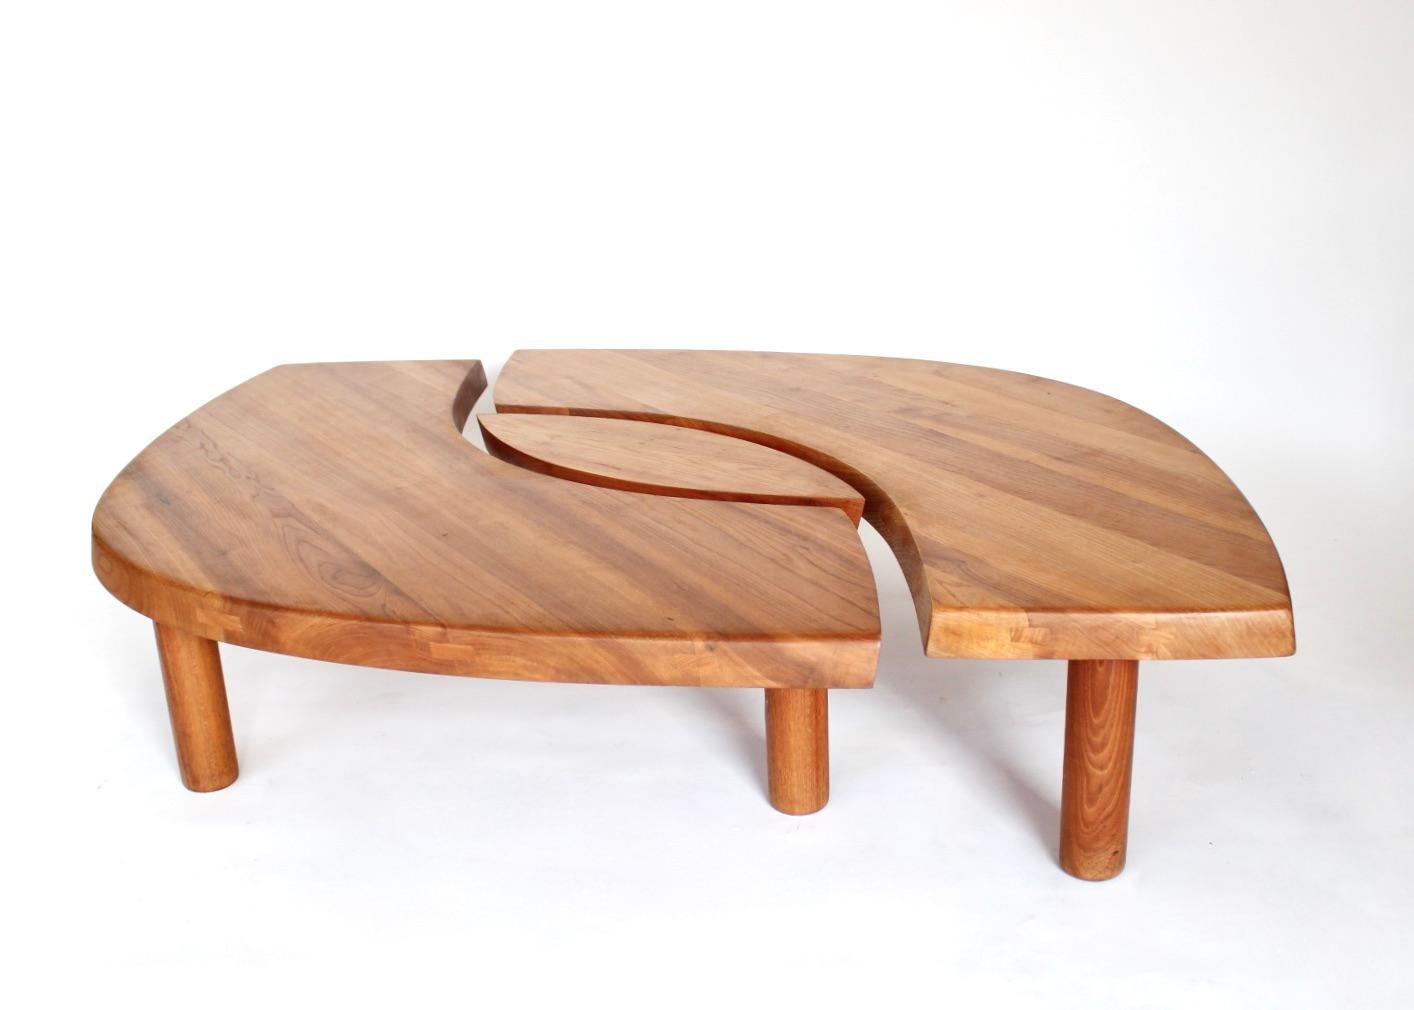 Pierre Chapo French Elm Wood Coffee Table Model T22 C 1967 3